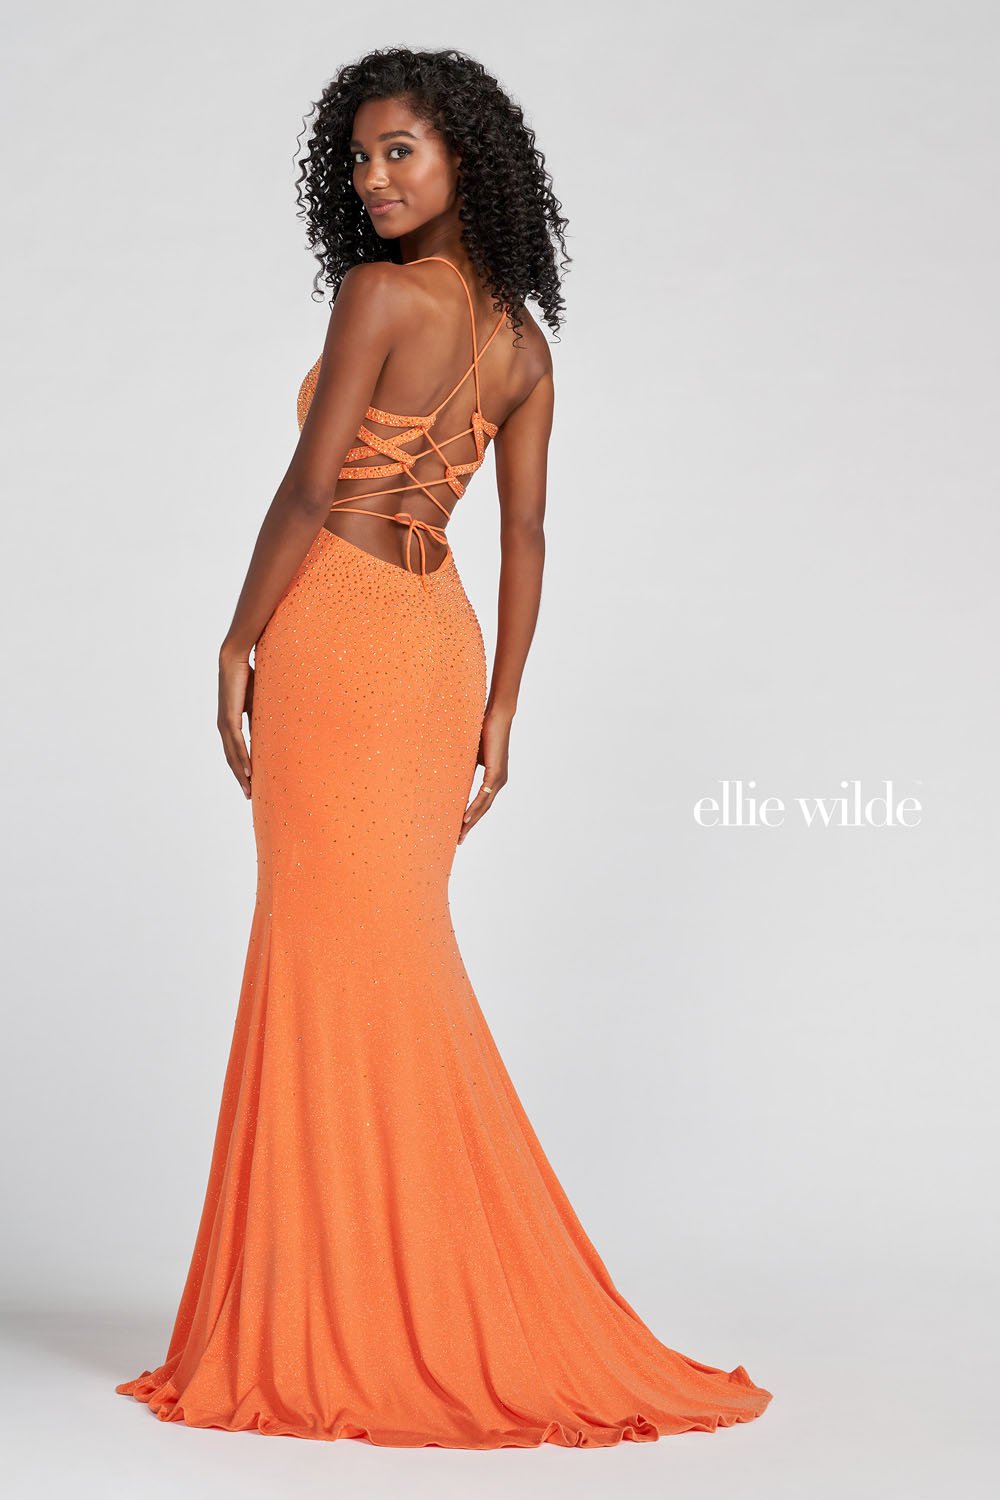 Ellie Wilde Orange EW122033 Prom Dress Image.  Orange formal dress.